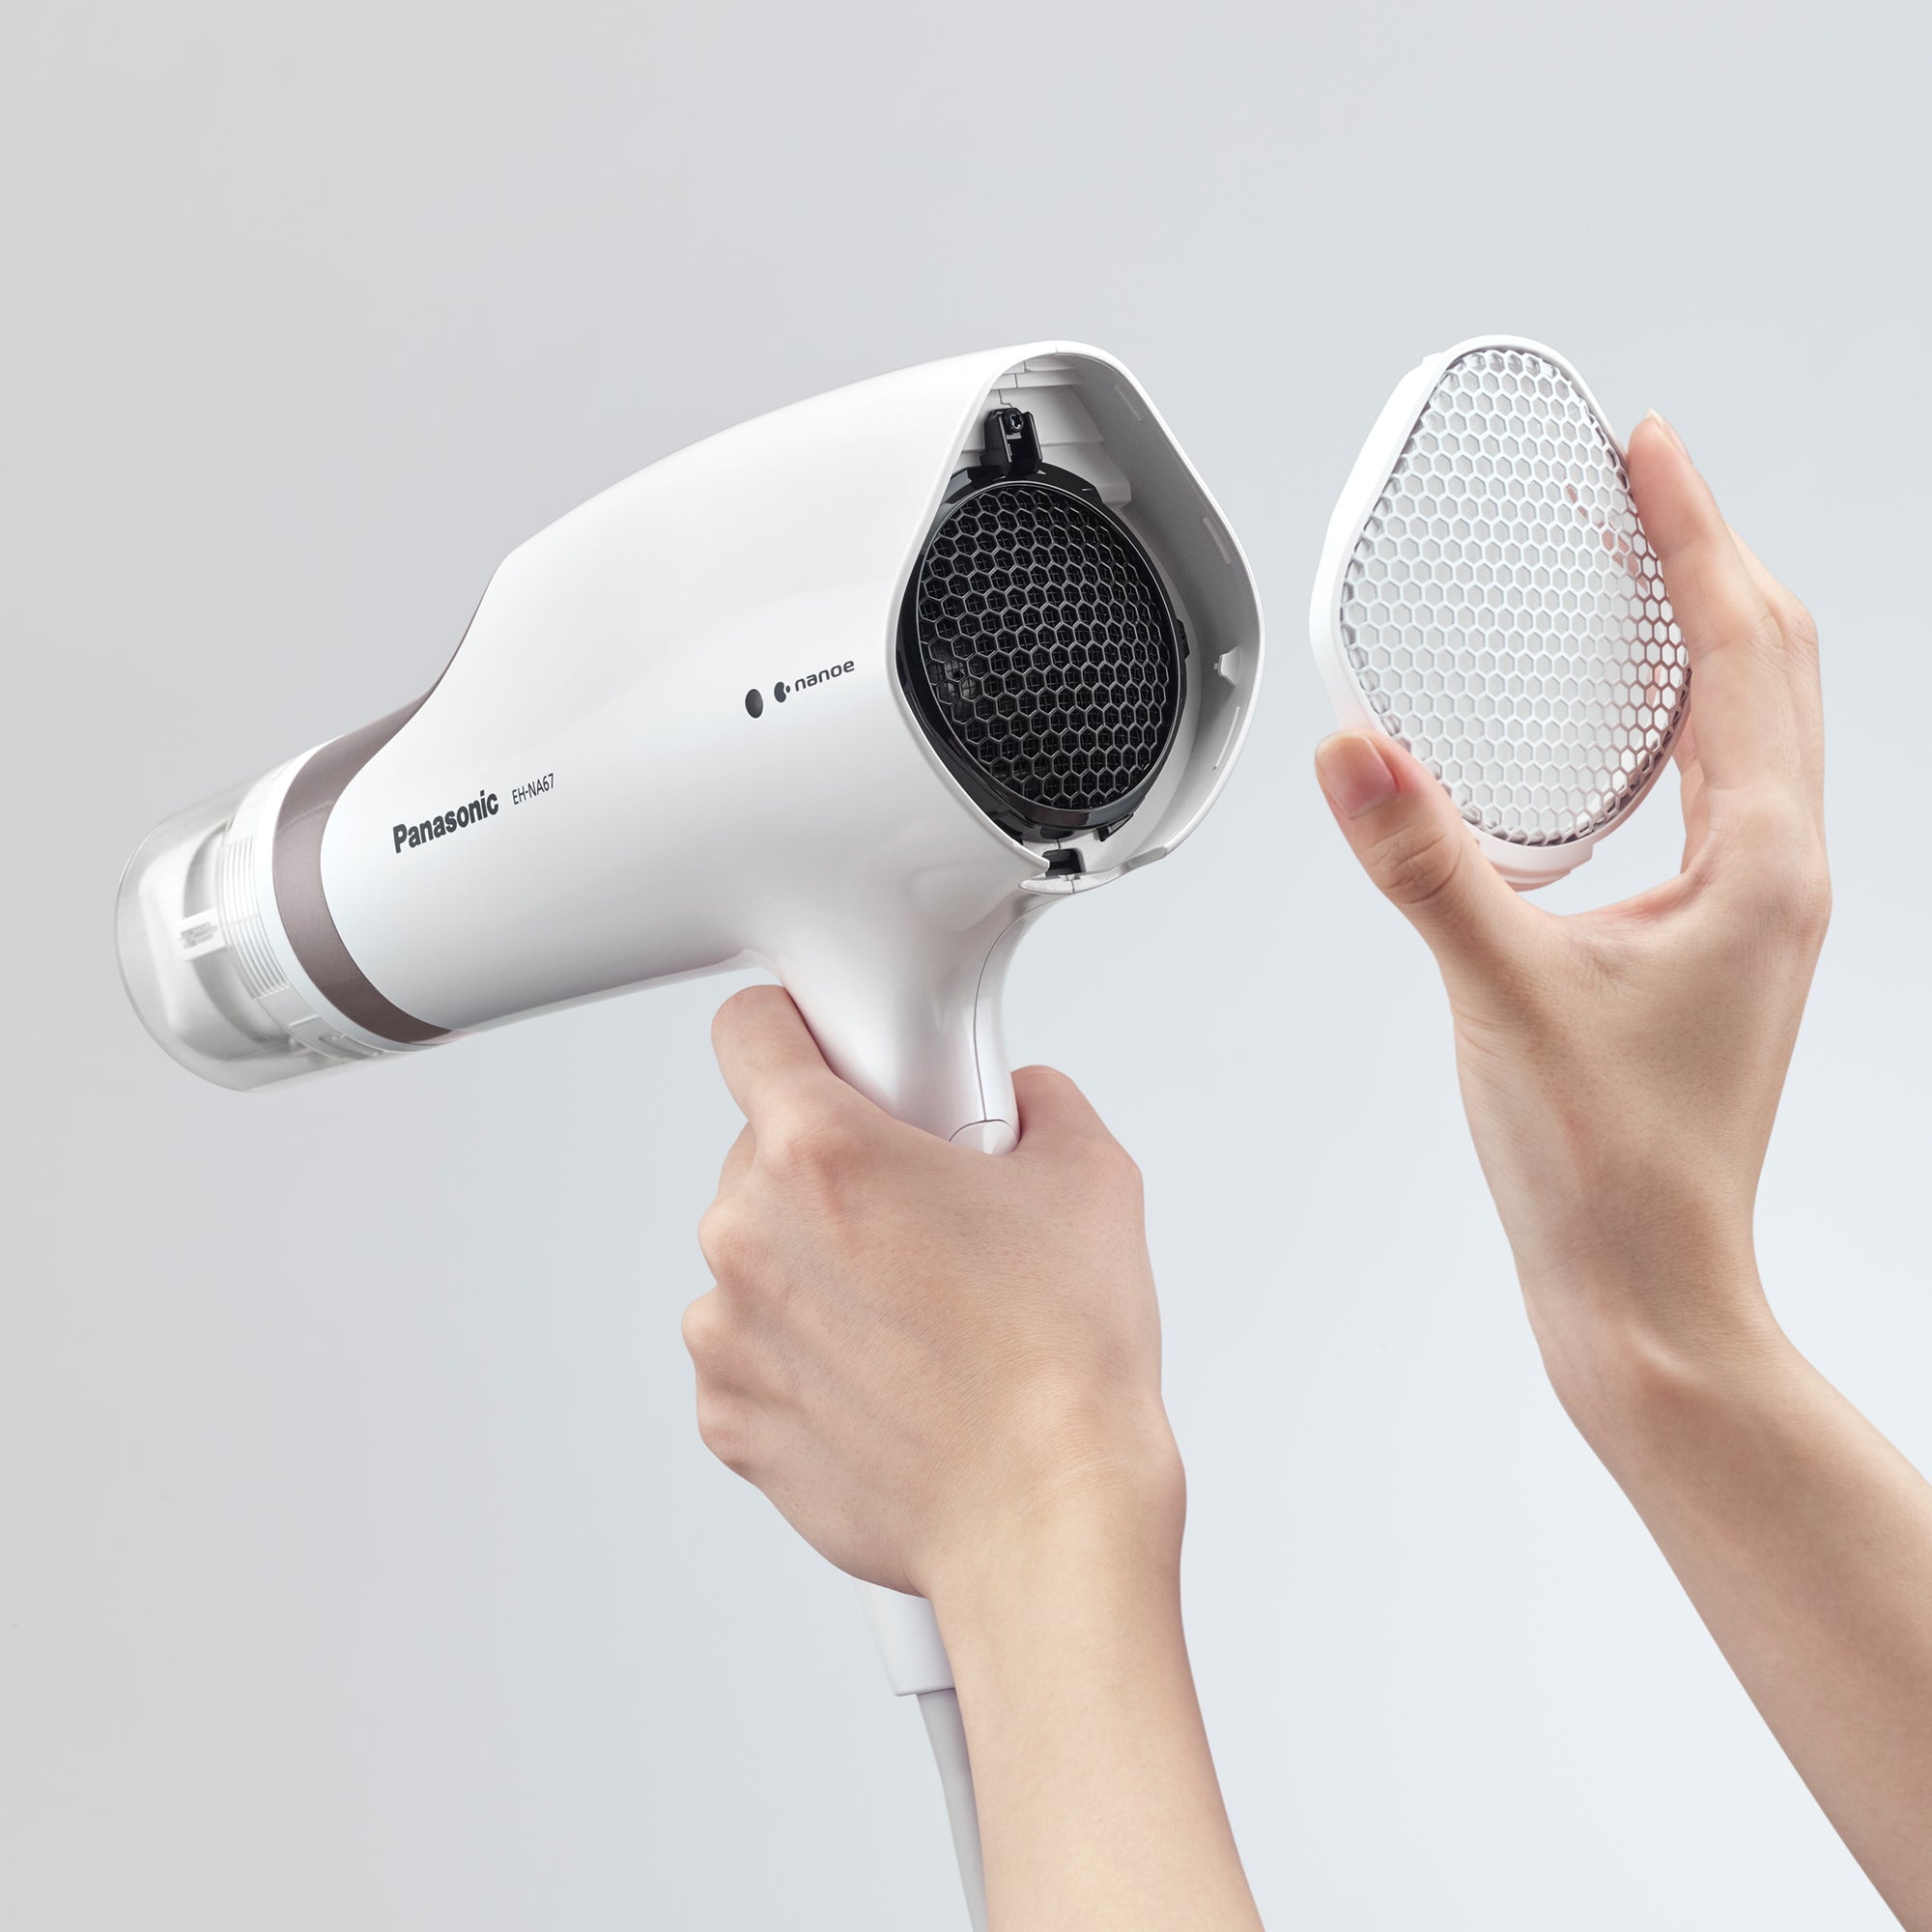 nanoe™ Hair Dryer with Oscillating Quick-Dry Nozzle